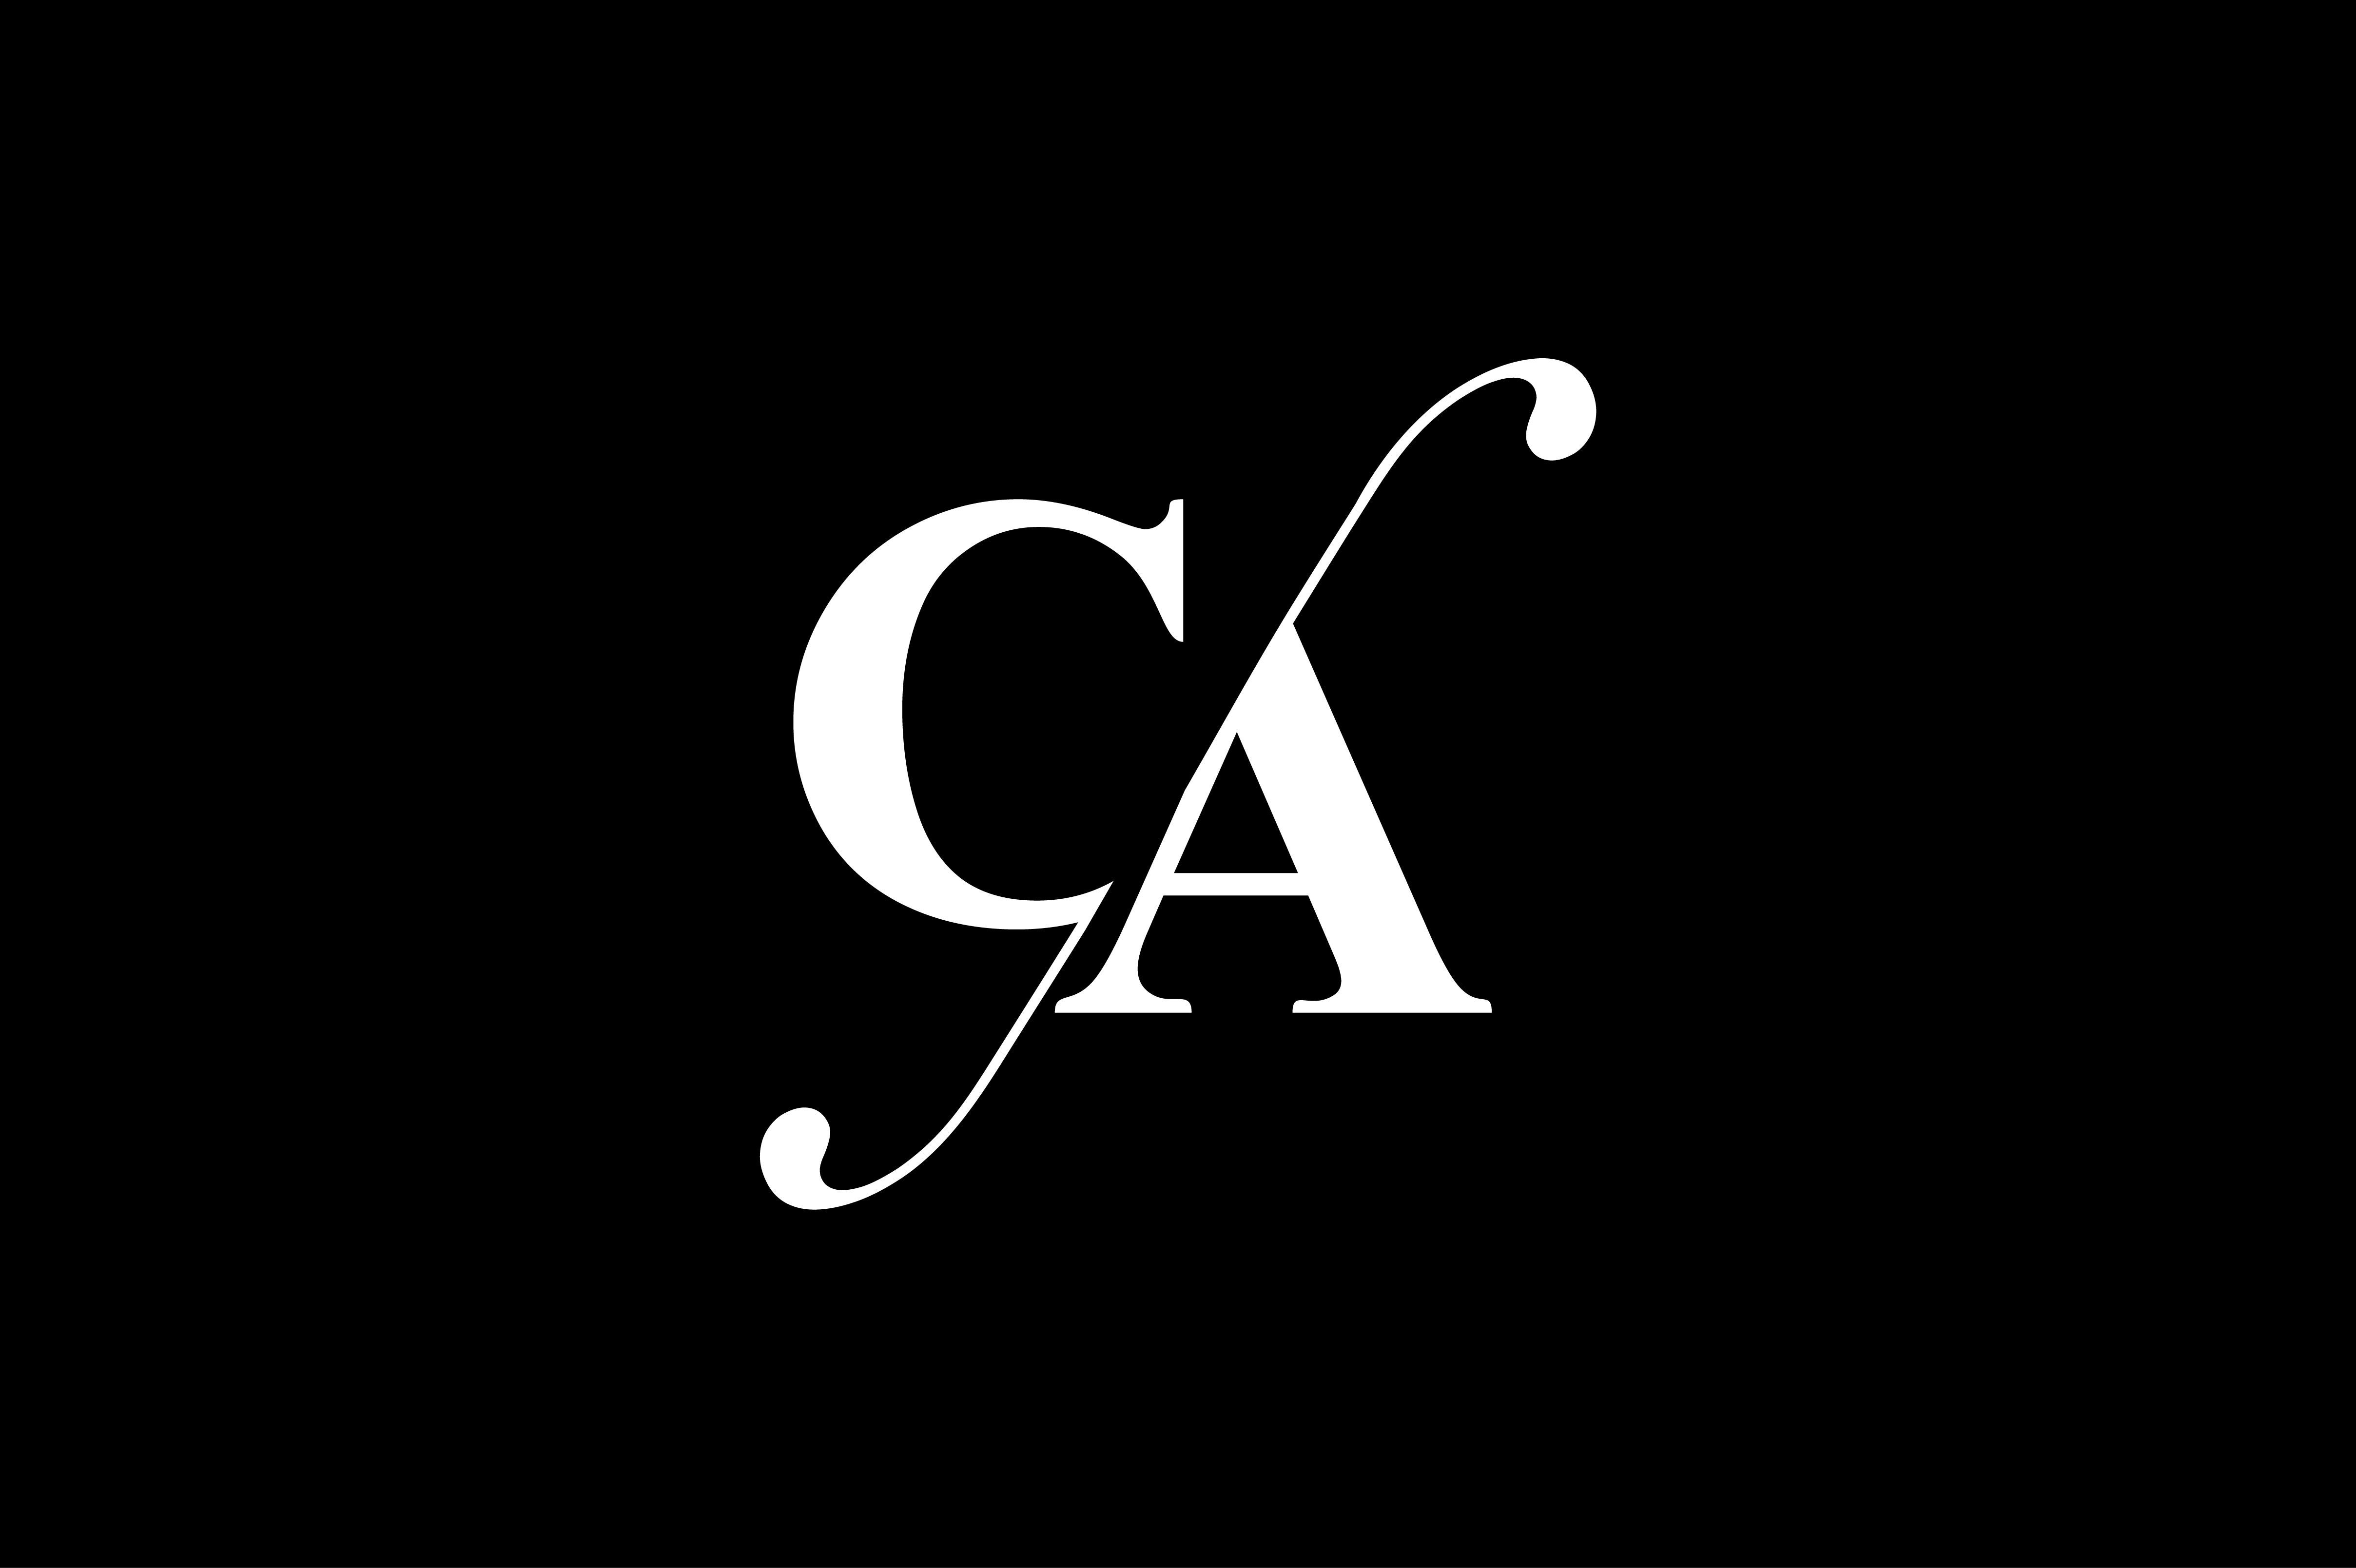 ca-monogram-logo-design-by-vectorseller-thehungryjpeg